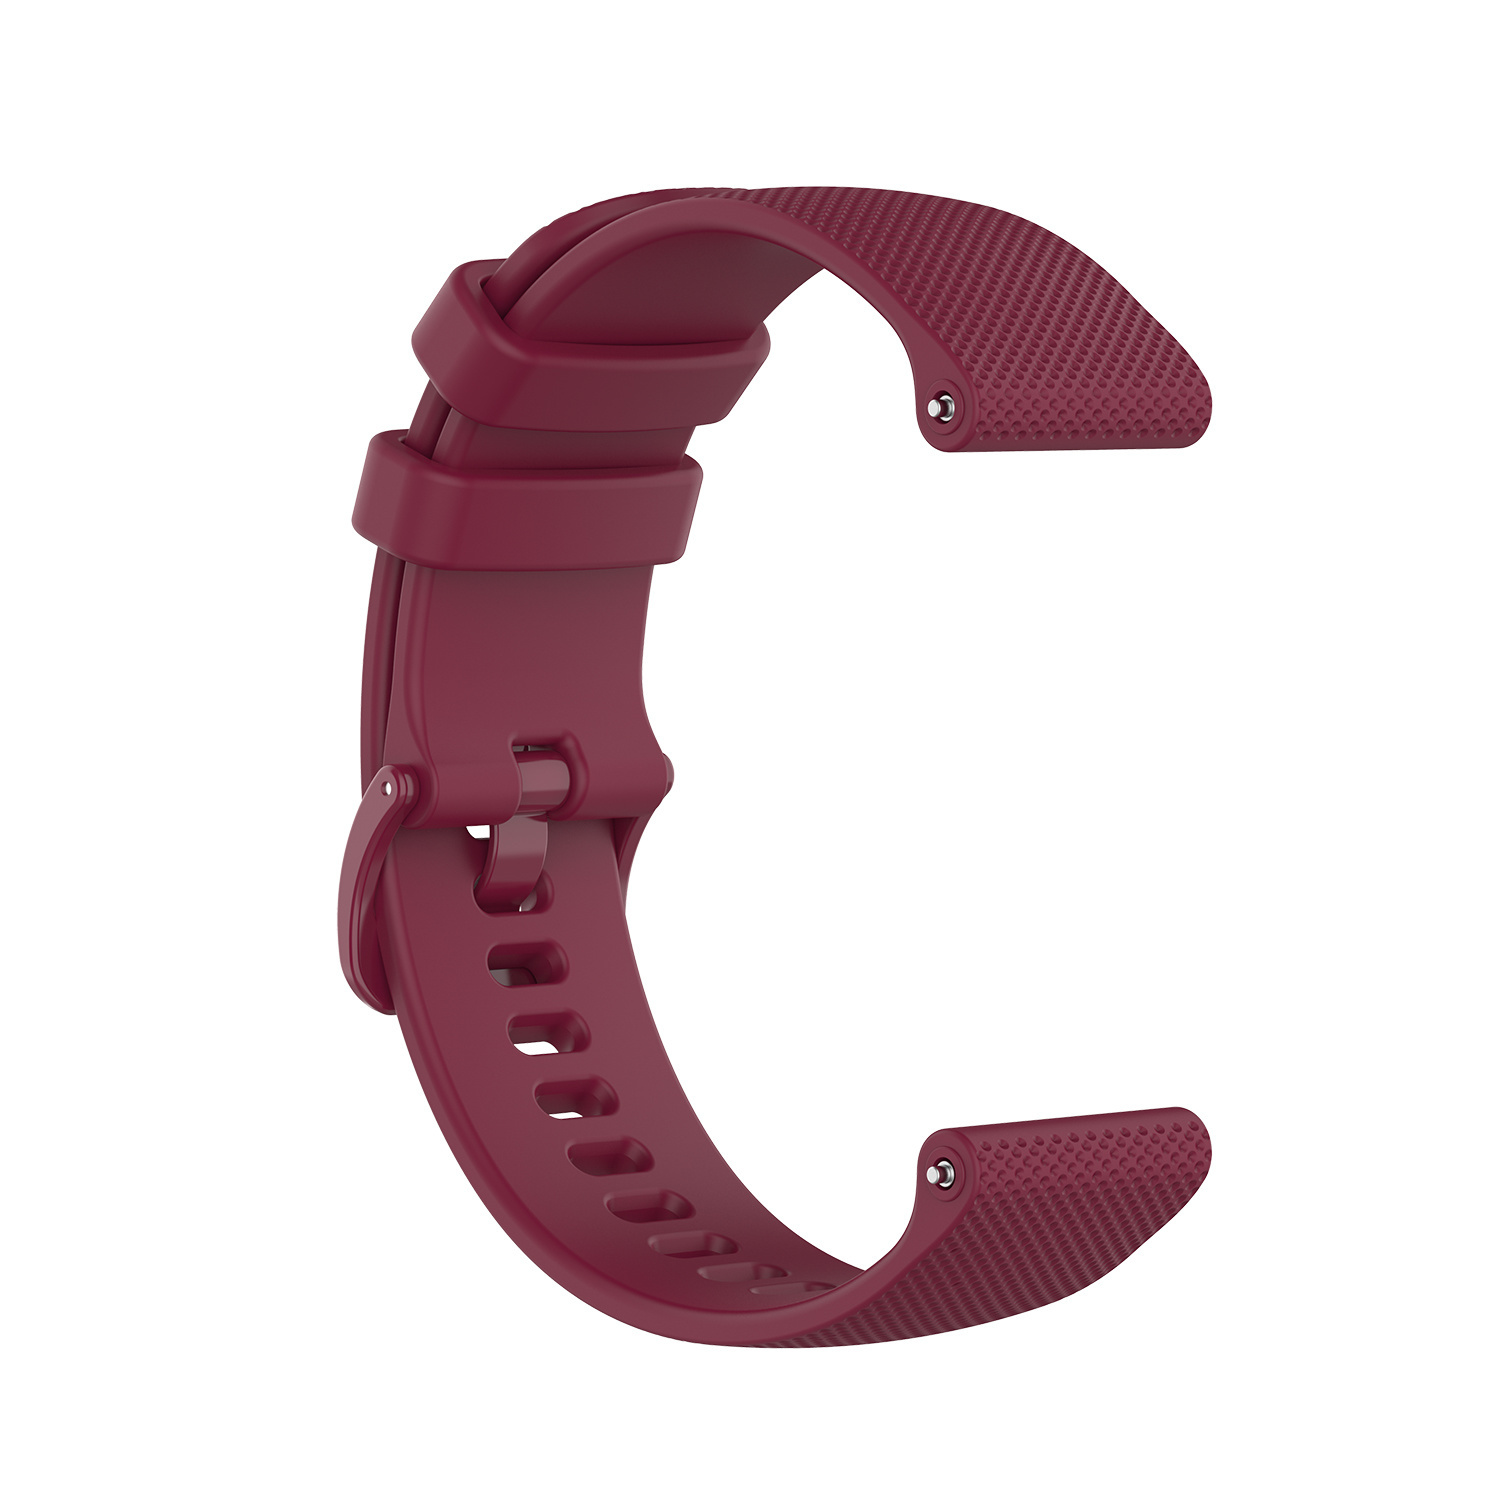 Cinturino sport con fibbia per Huawei Watch GT - rosso vino